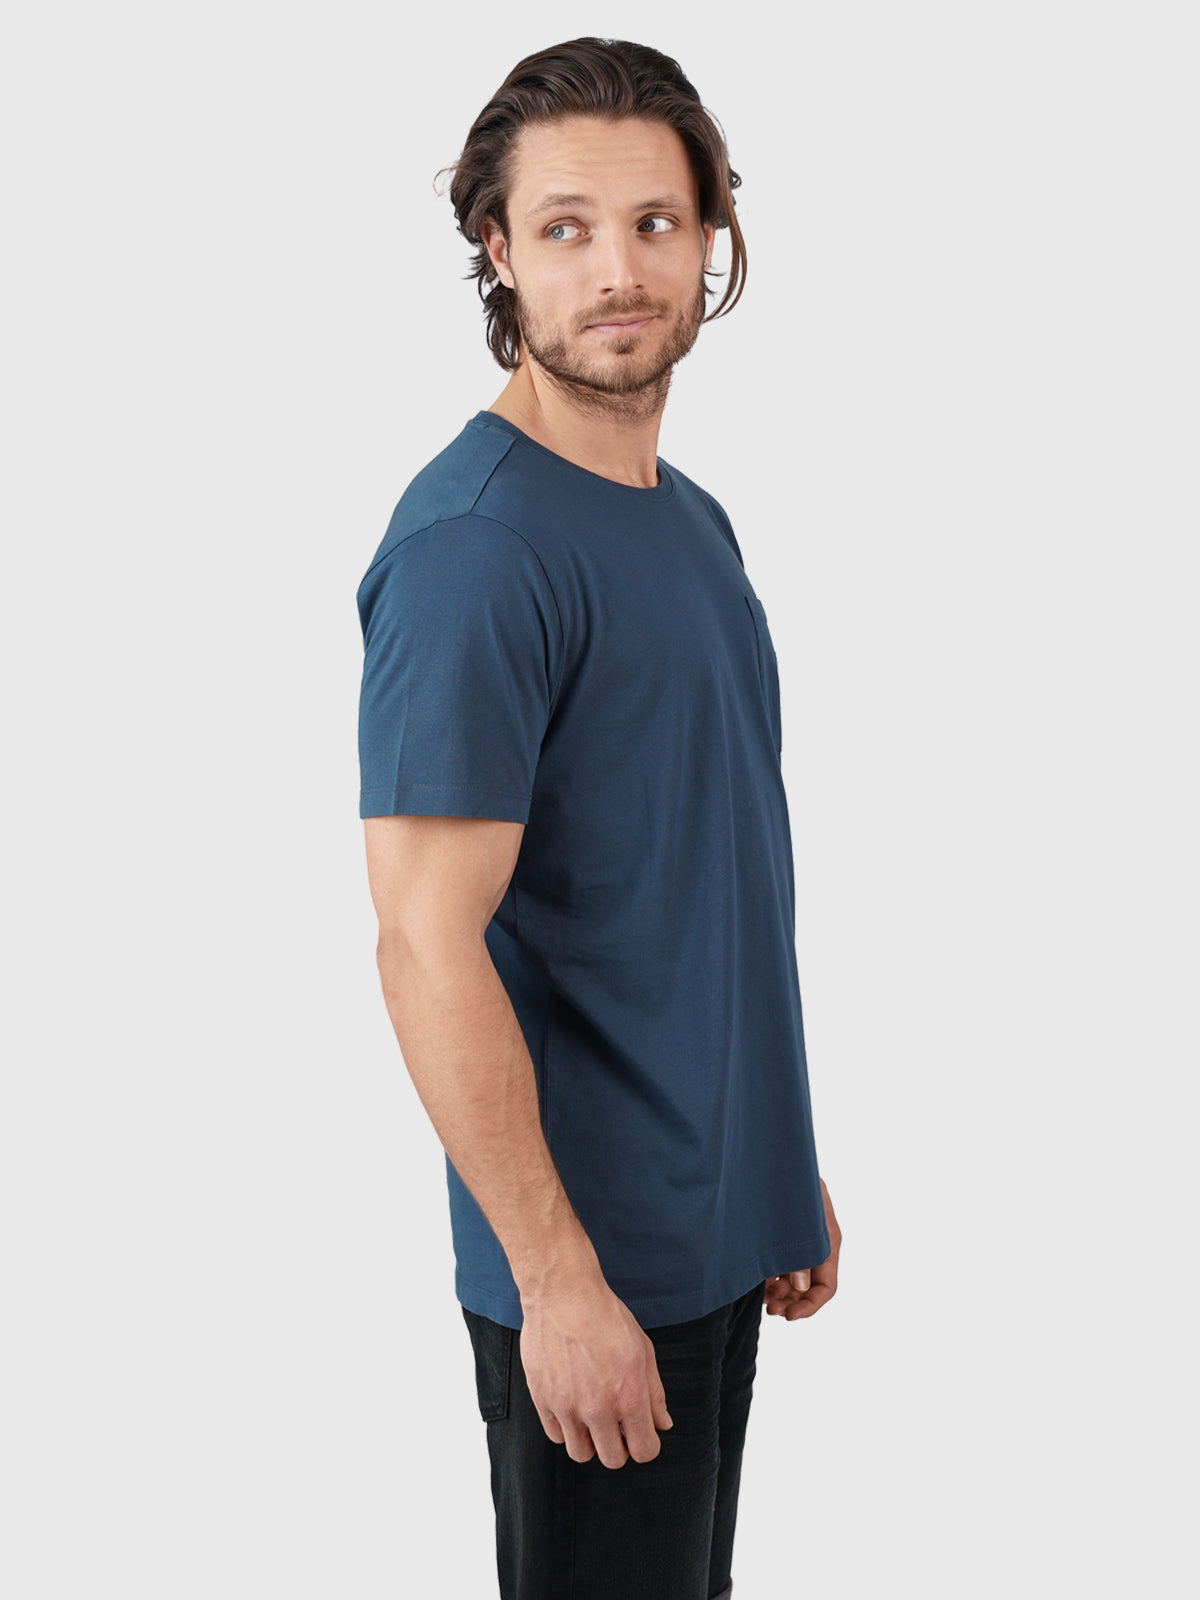 Axle-N Men T-Shirt | Blue